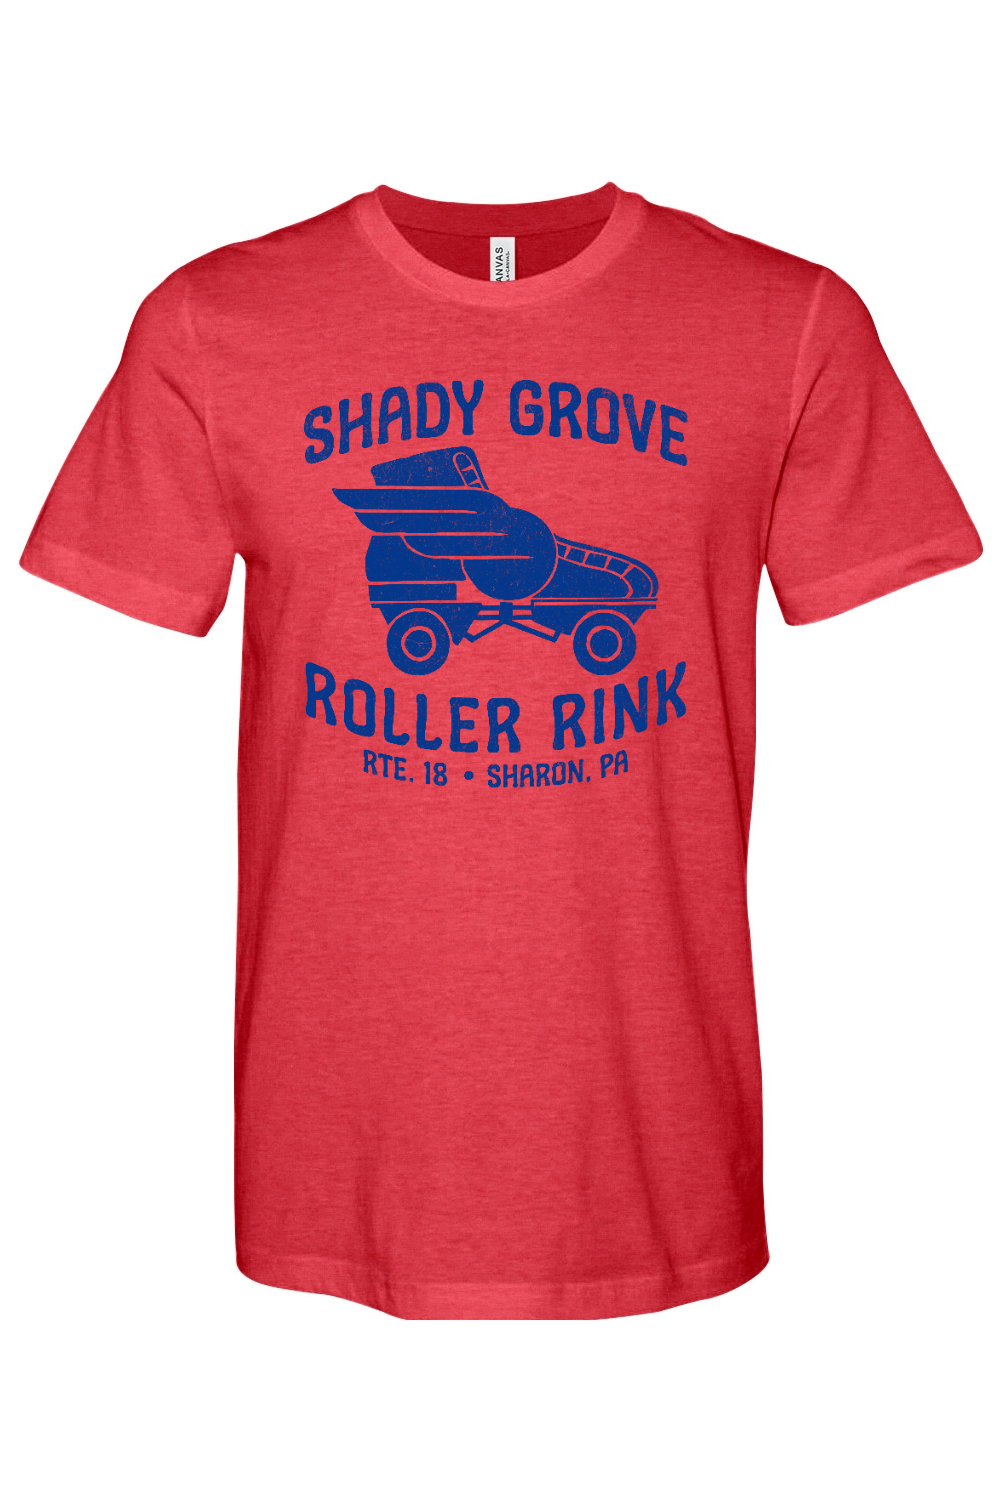 Shady Grove Roller Rink - Sharon, PA - Yinzylvania